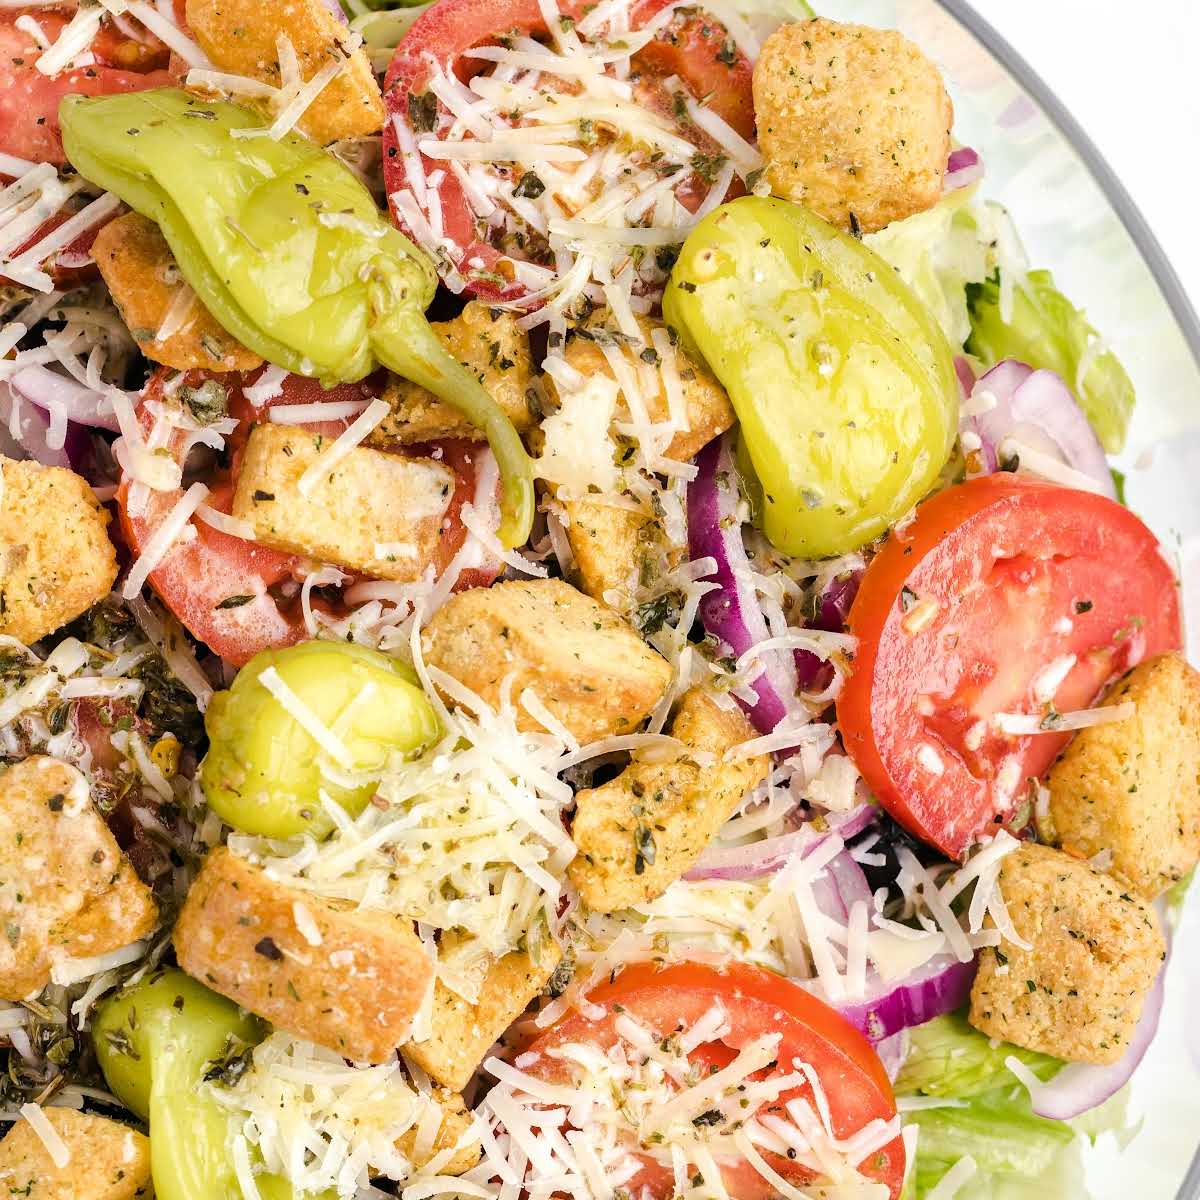 https://spaceshipsandlaserbeams.com/wp-content/uploads/2021/09/Olive-Garden-Salad-Recipe-recipe-card-1.jpg